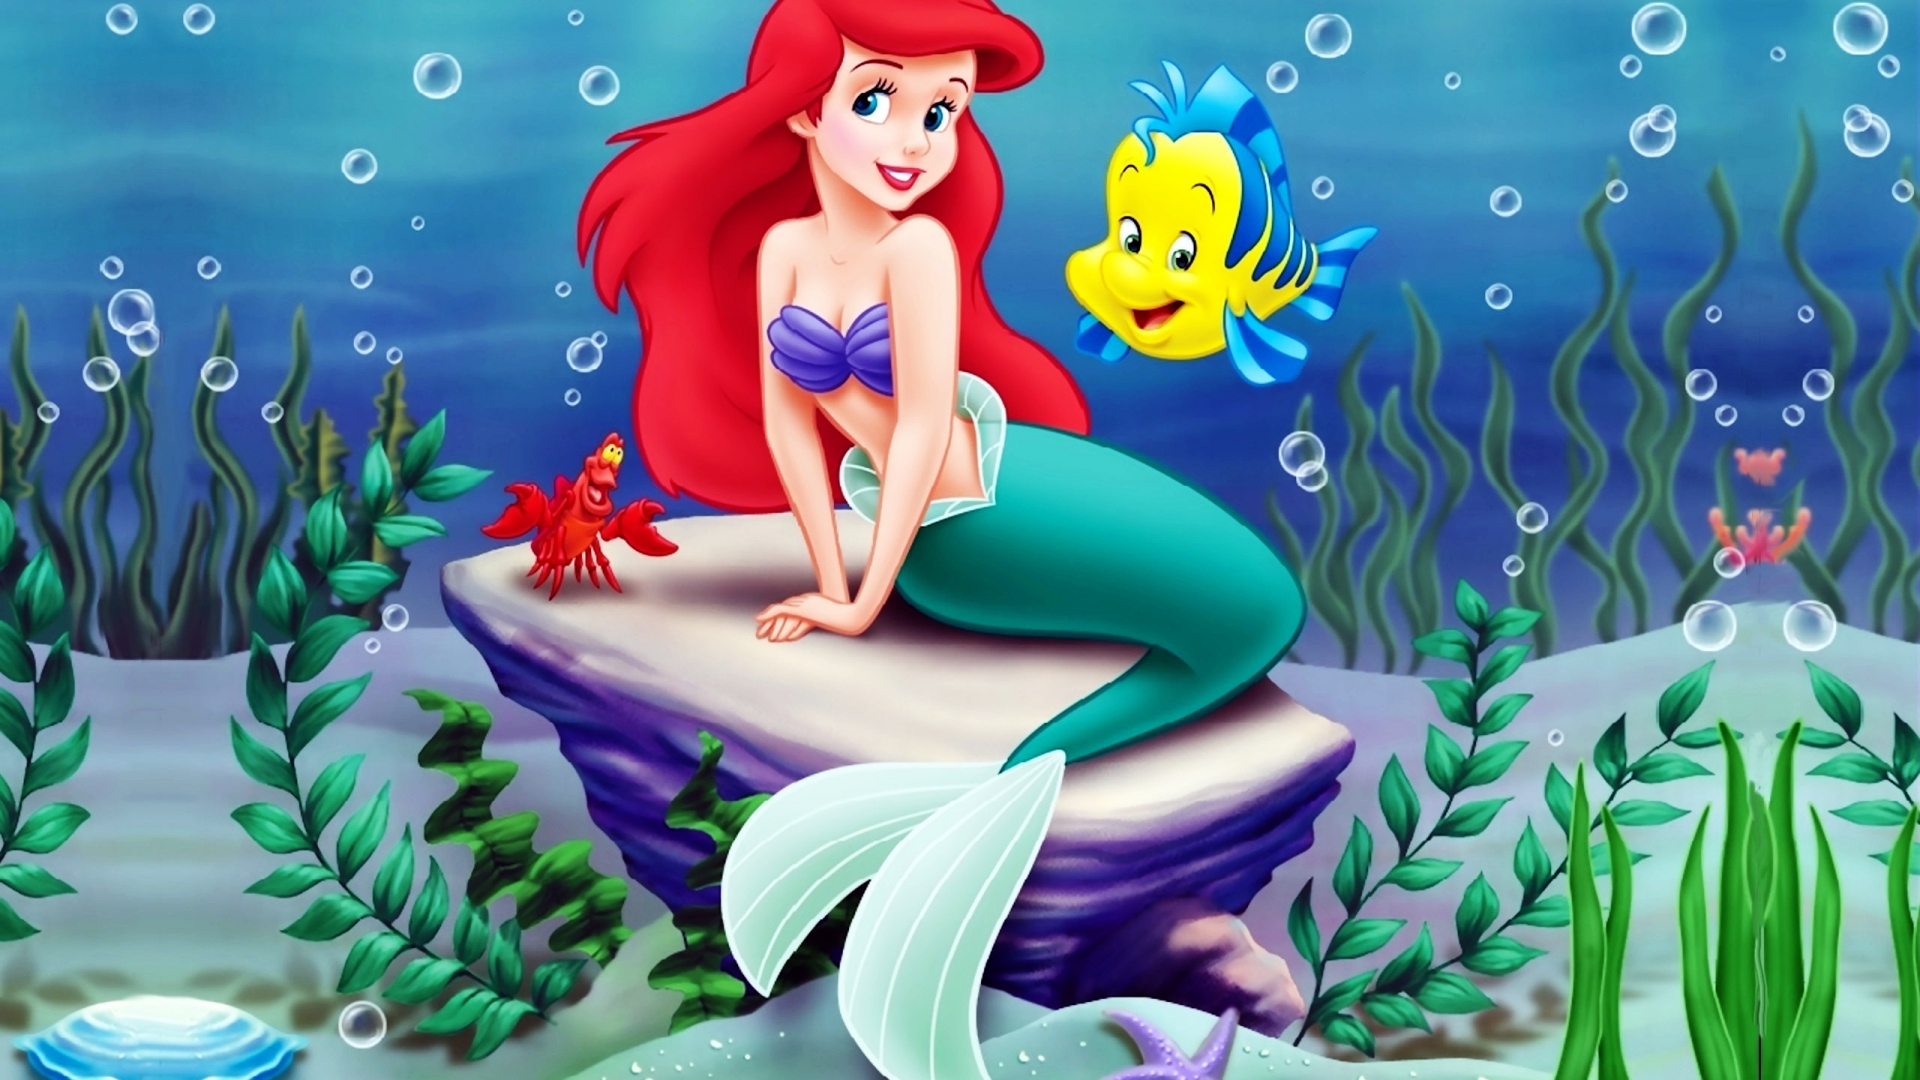 Little Mermaid Ariel for 1920 x 1080 HDTV 1080p resolution